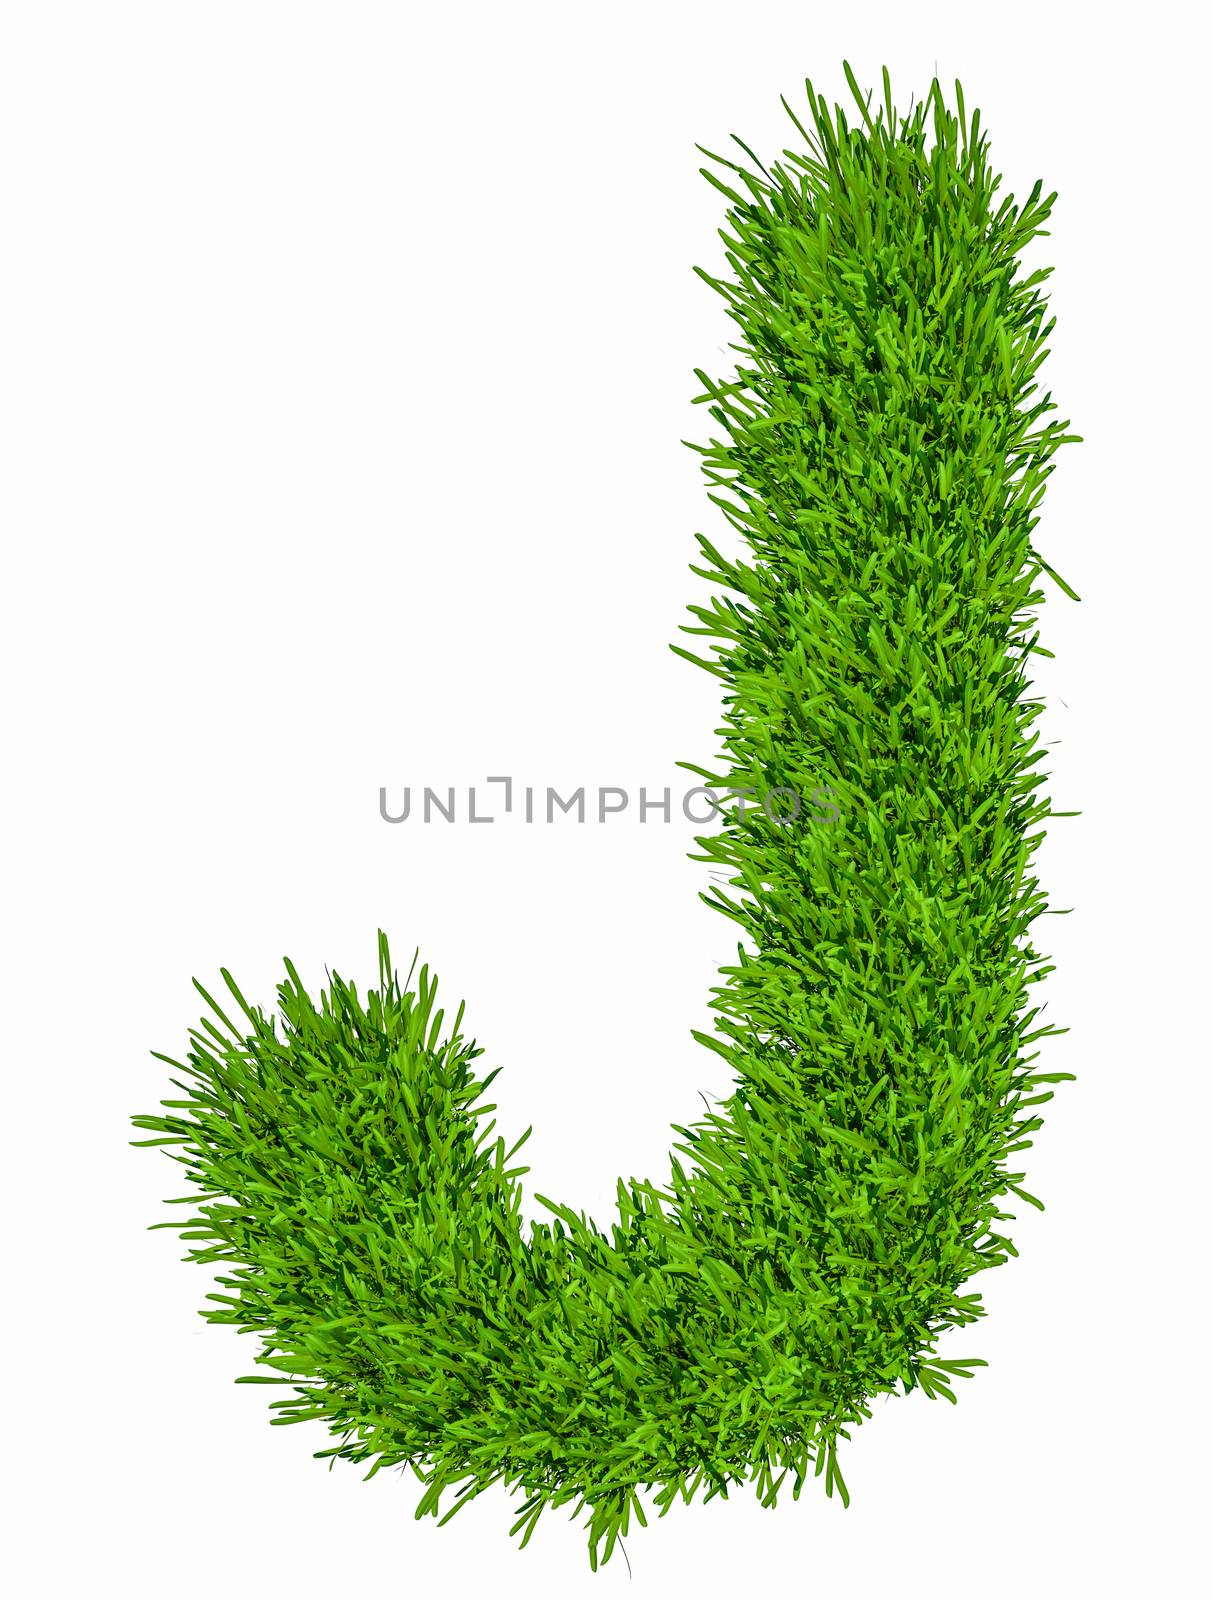 Letter of grass alphabet. 3d illustration by cherezoff